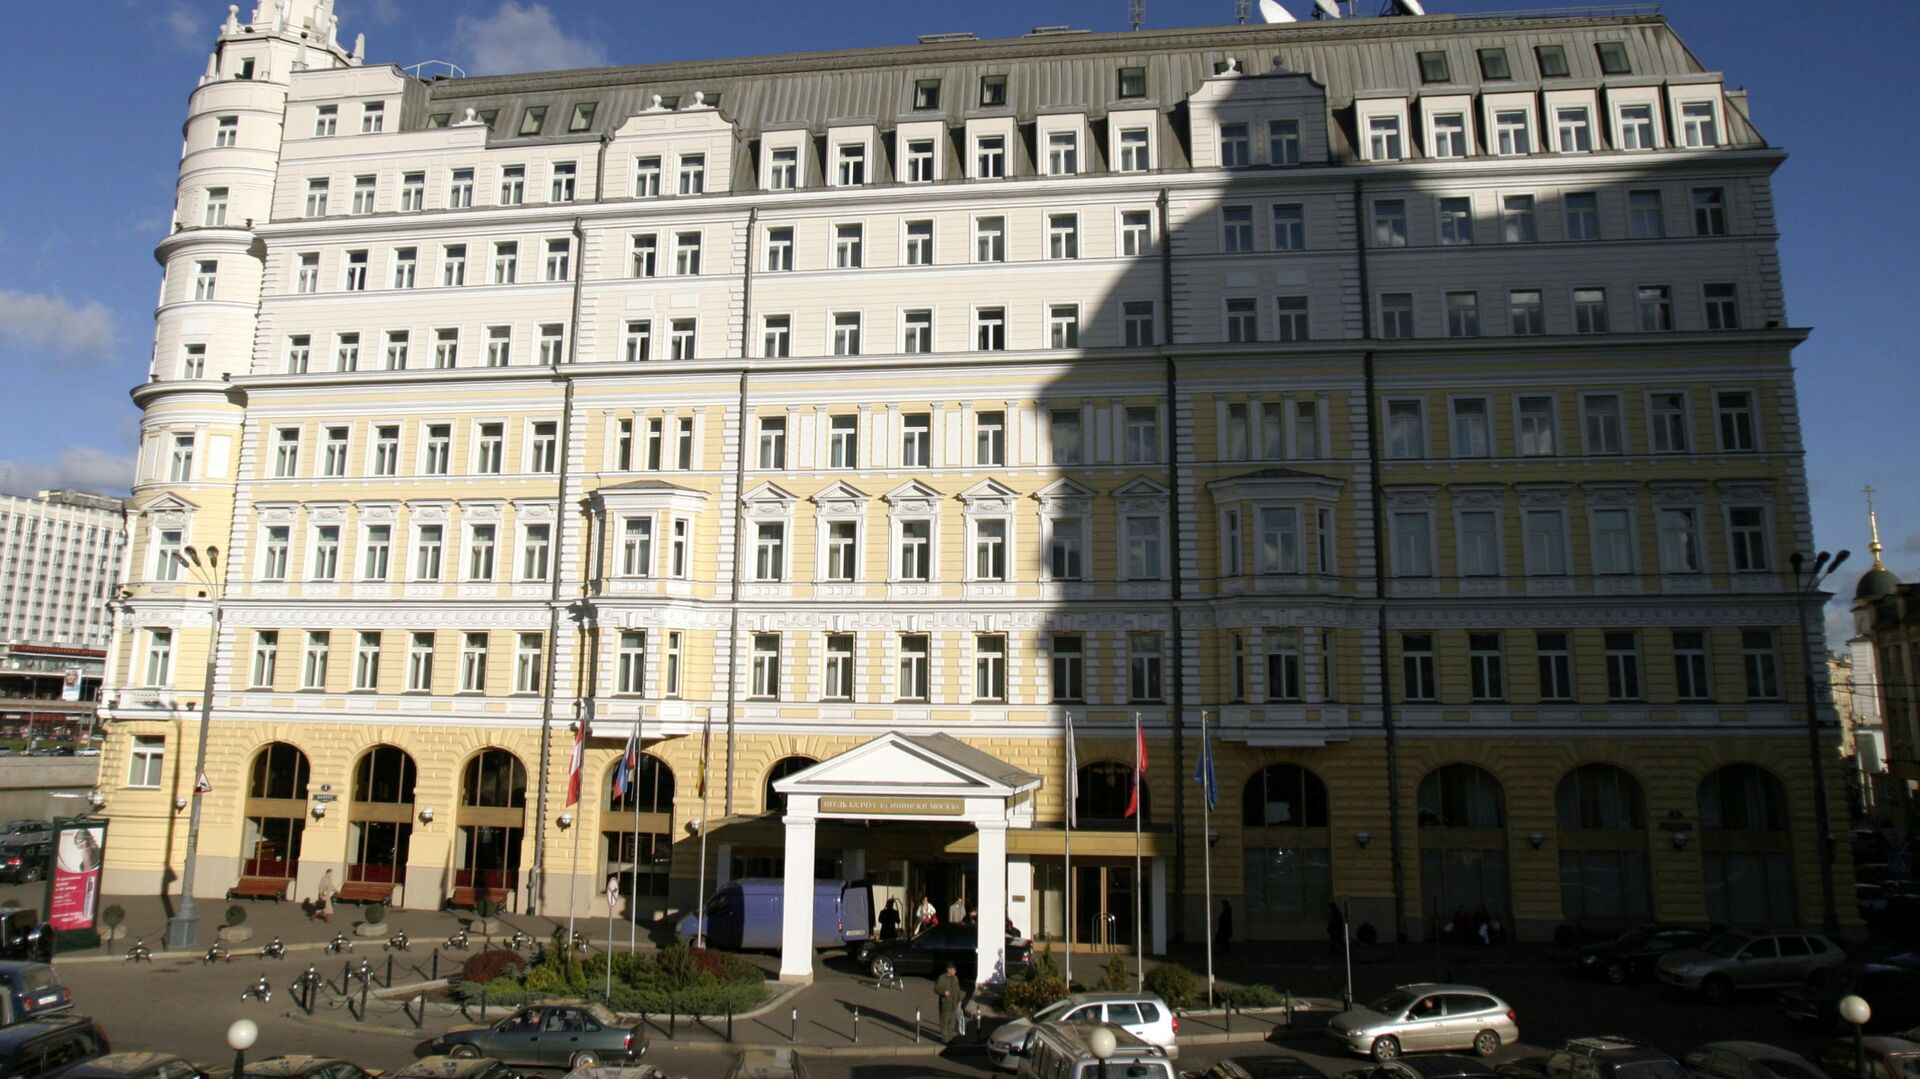 Балчуг 16. Балчуг Кемпински отель Москва. Балчуг Кемпински парковка. Балчуг Болгария.